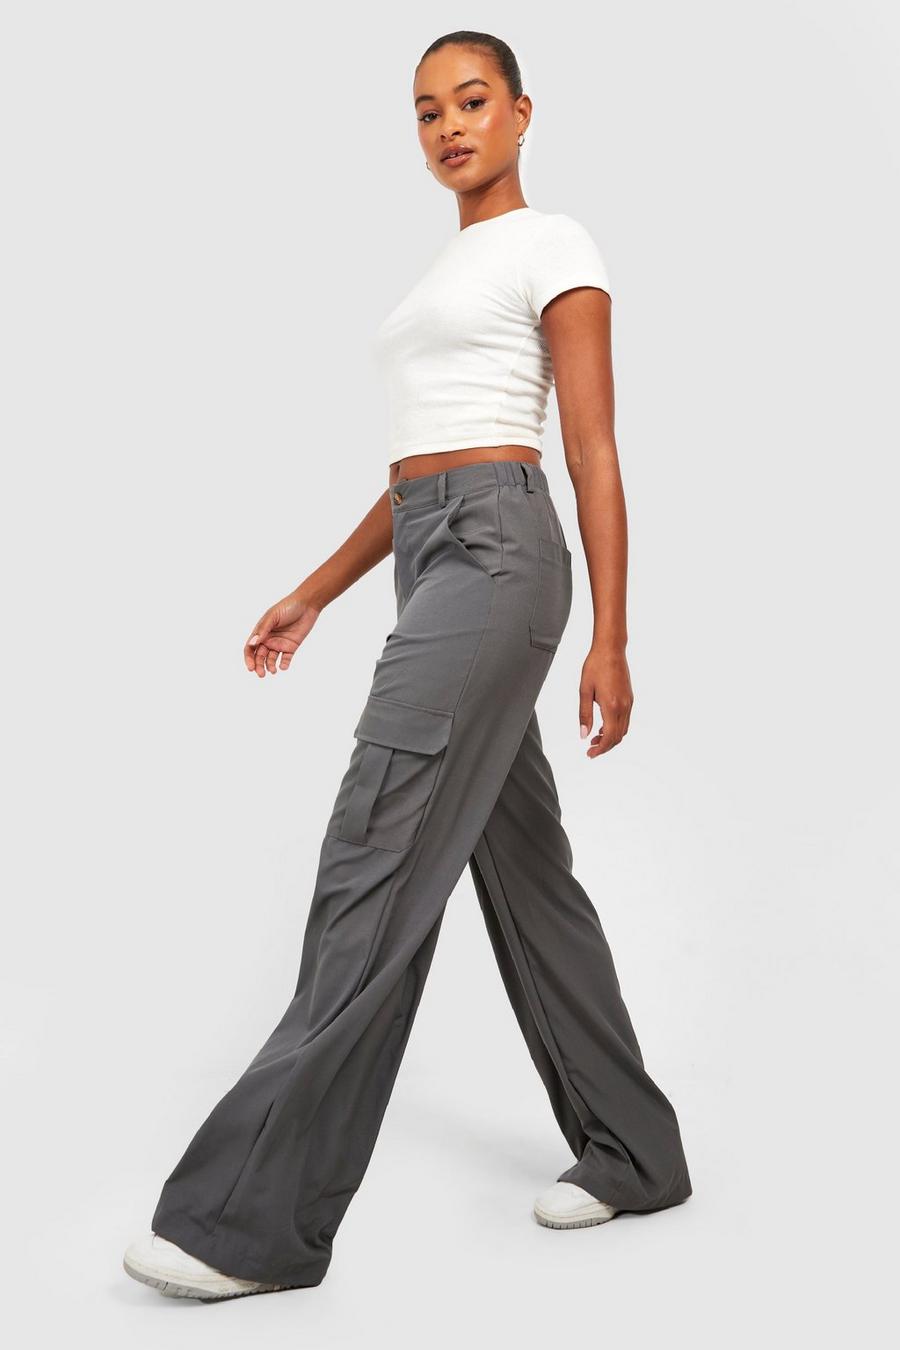 Charcoal מכנסי דגמ"ח בגזרת רגל רחבה ובגזרת מותניים גבוהה עם כיס, לנשים גבוהות image number 1